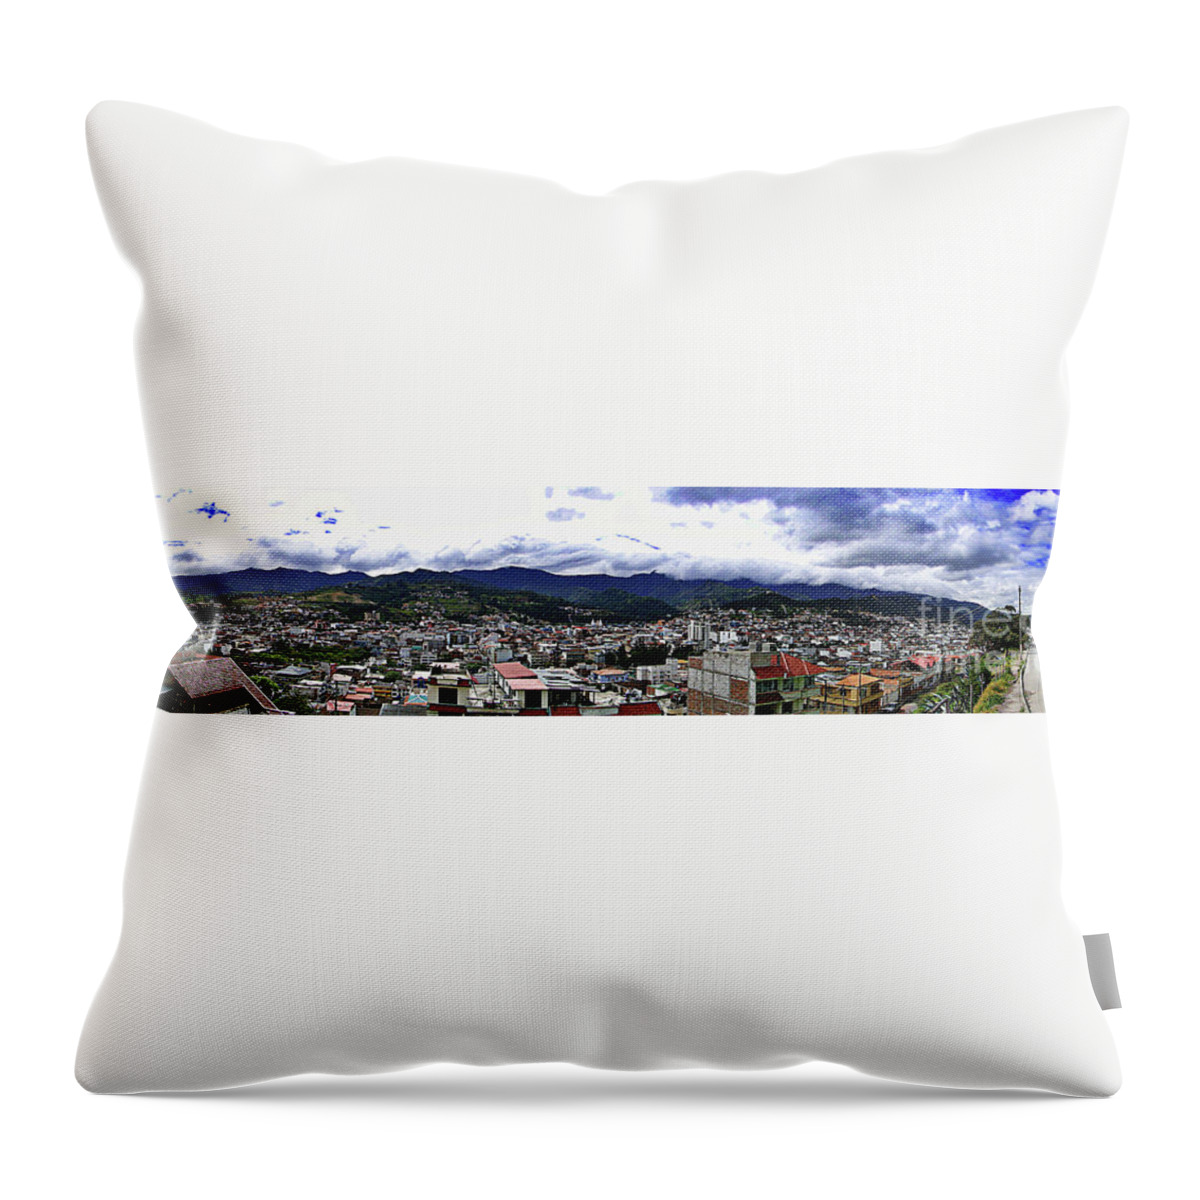 Loja Throw Pillow featuring the photograph Loja, Ecuador Panorama by Al Bourassa